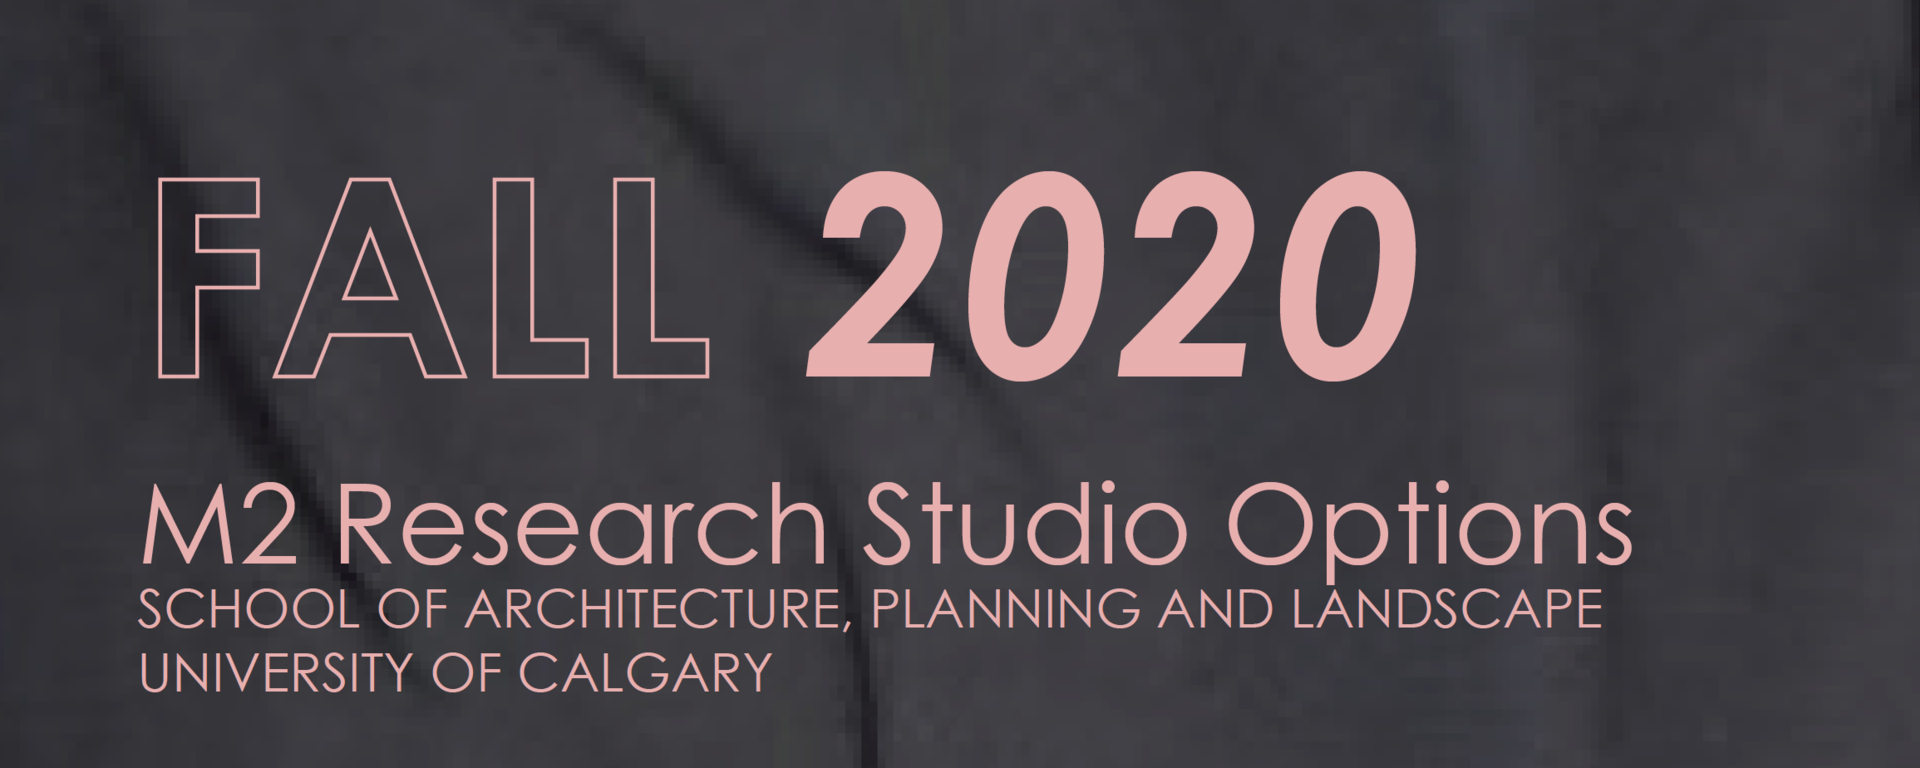 Fall 2020 M2 Research Studio Options